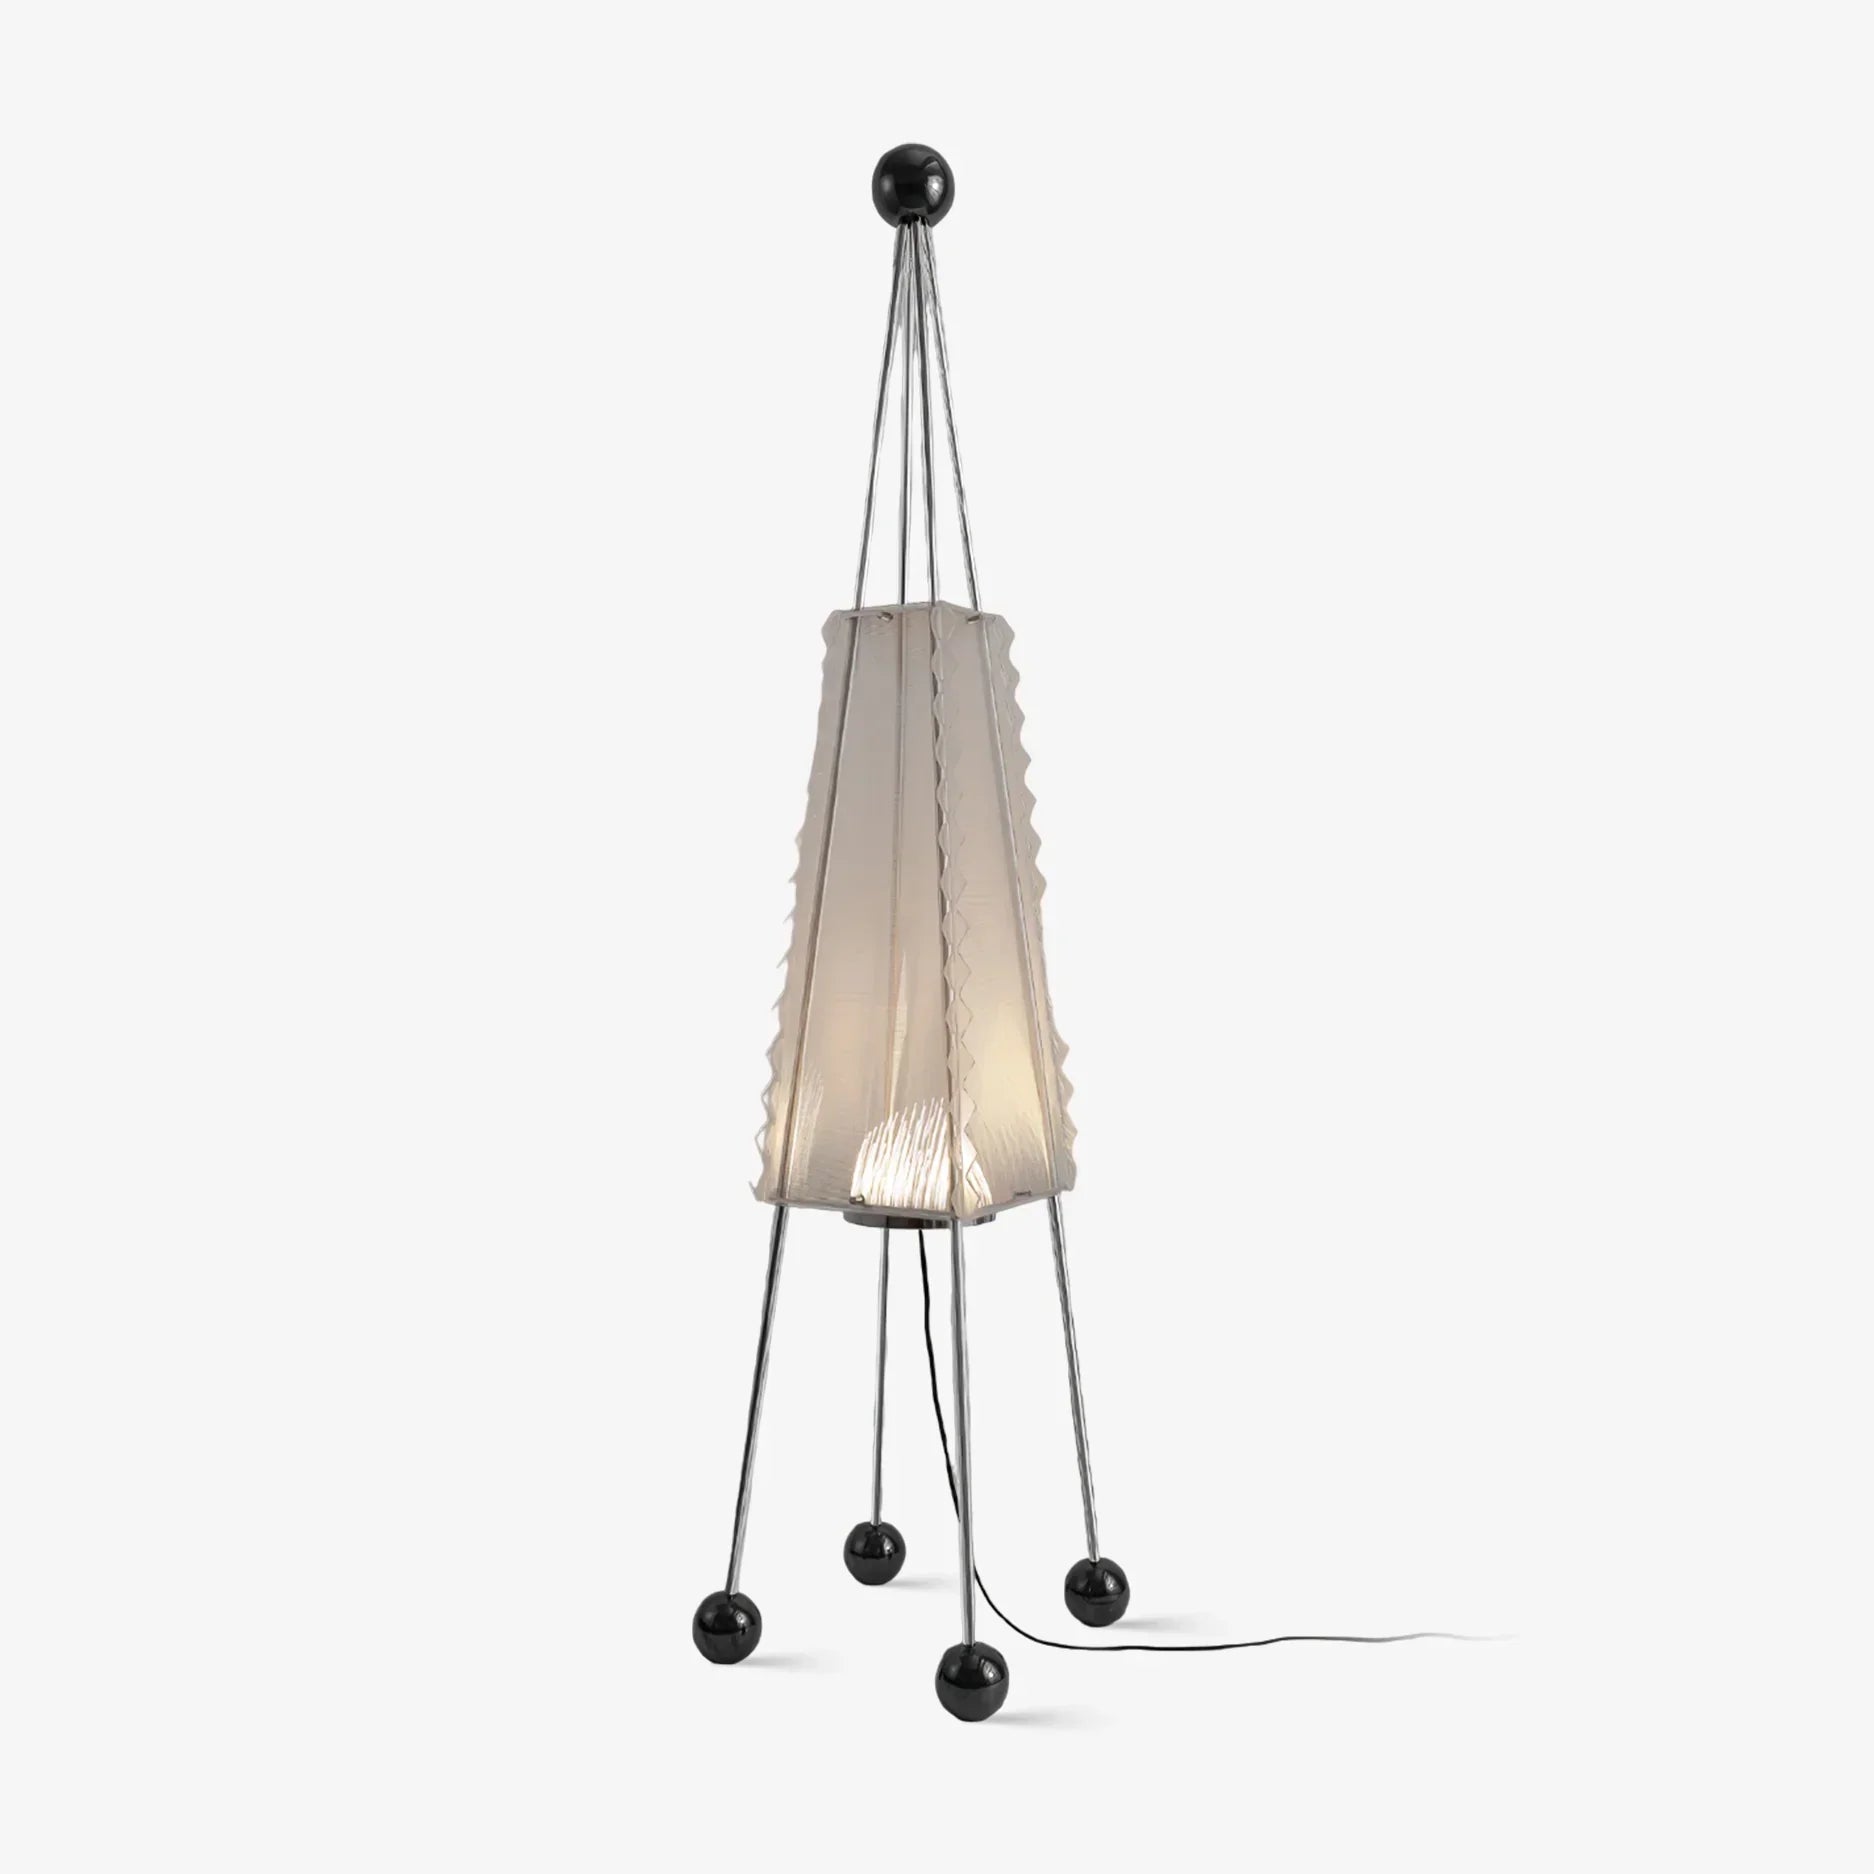 Led Tent Floor Lamp - Stainless Steel Tri-color Light 175cm Tall - Modern Lamps